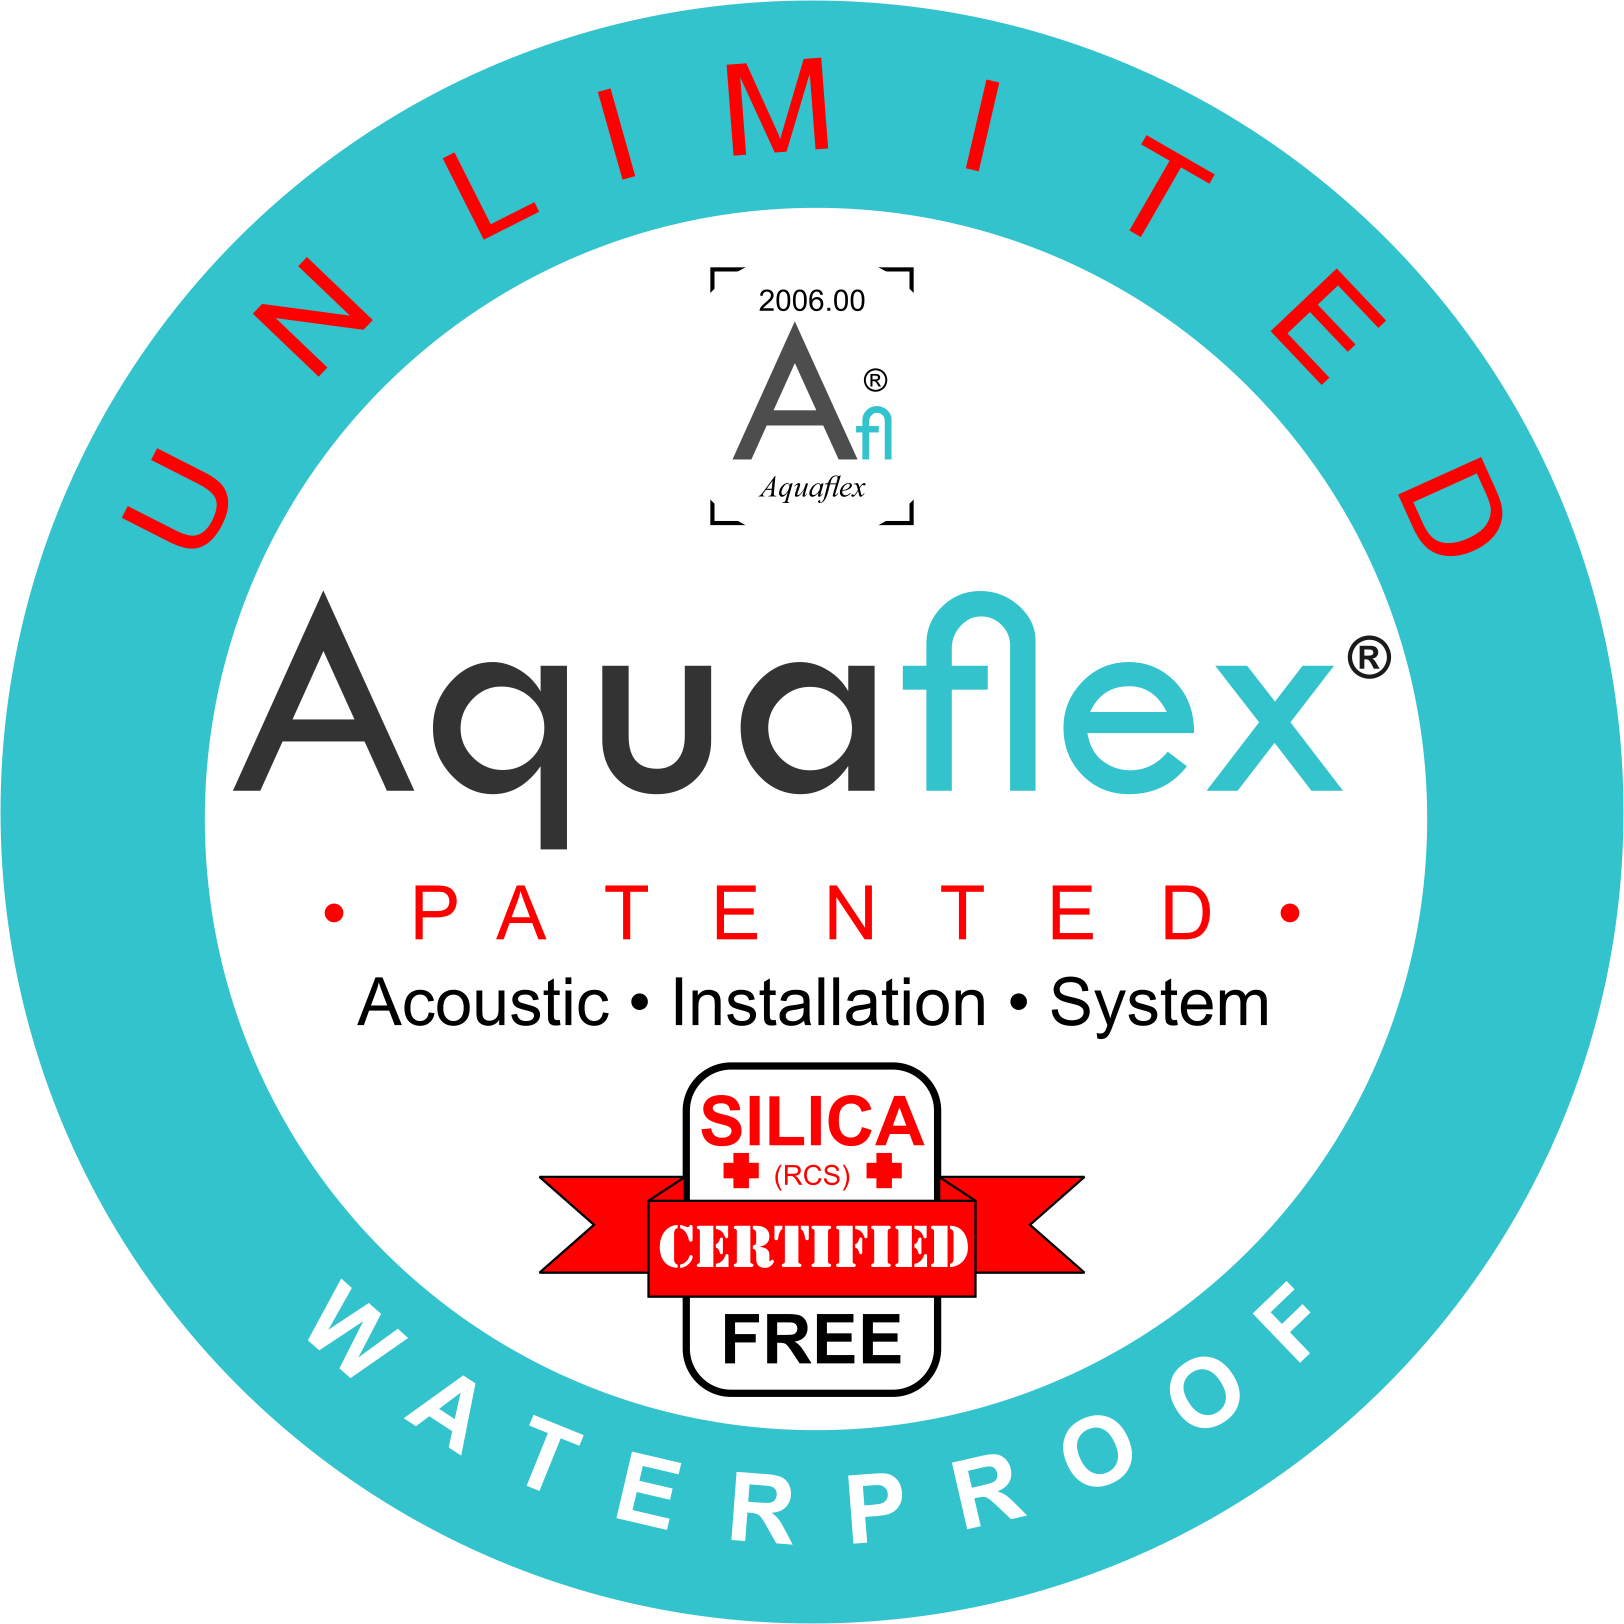 Aquaflex Logo